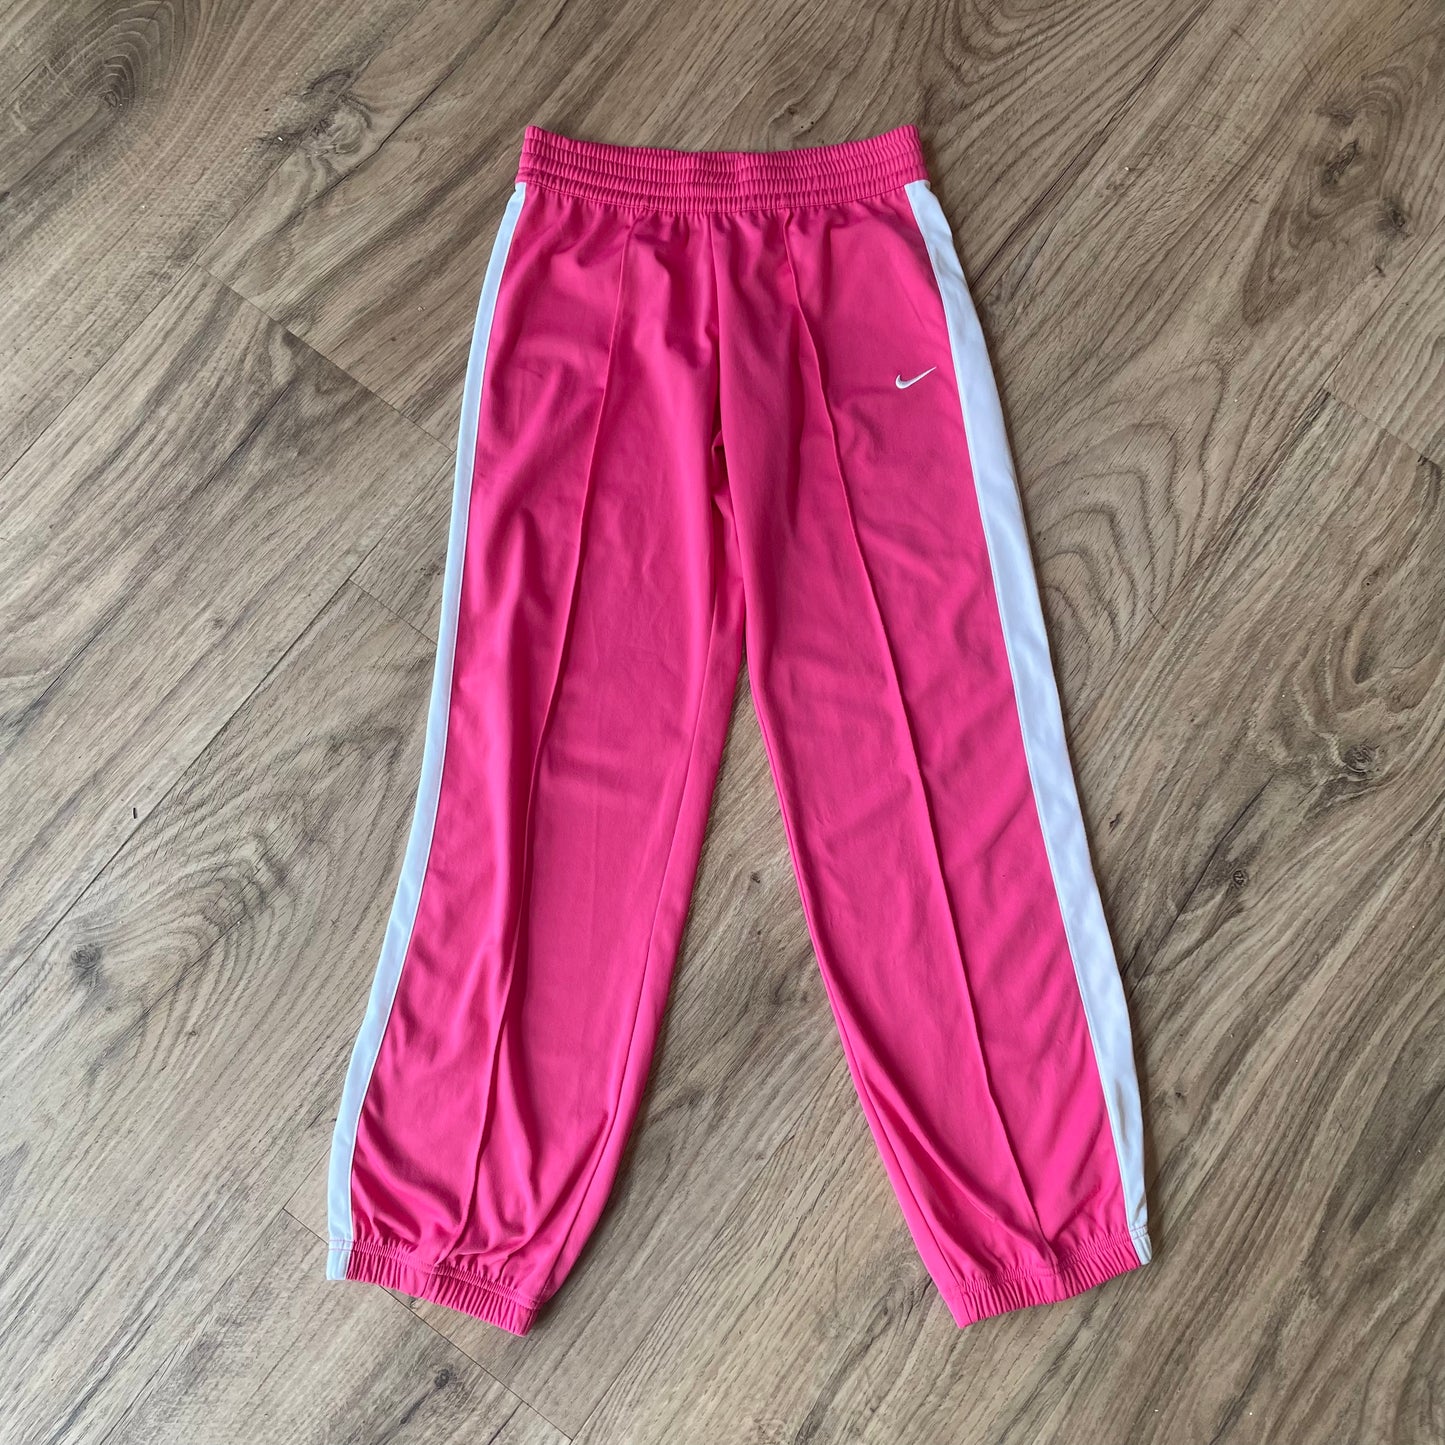 90s Pink Nike bottoms